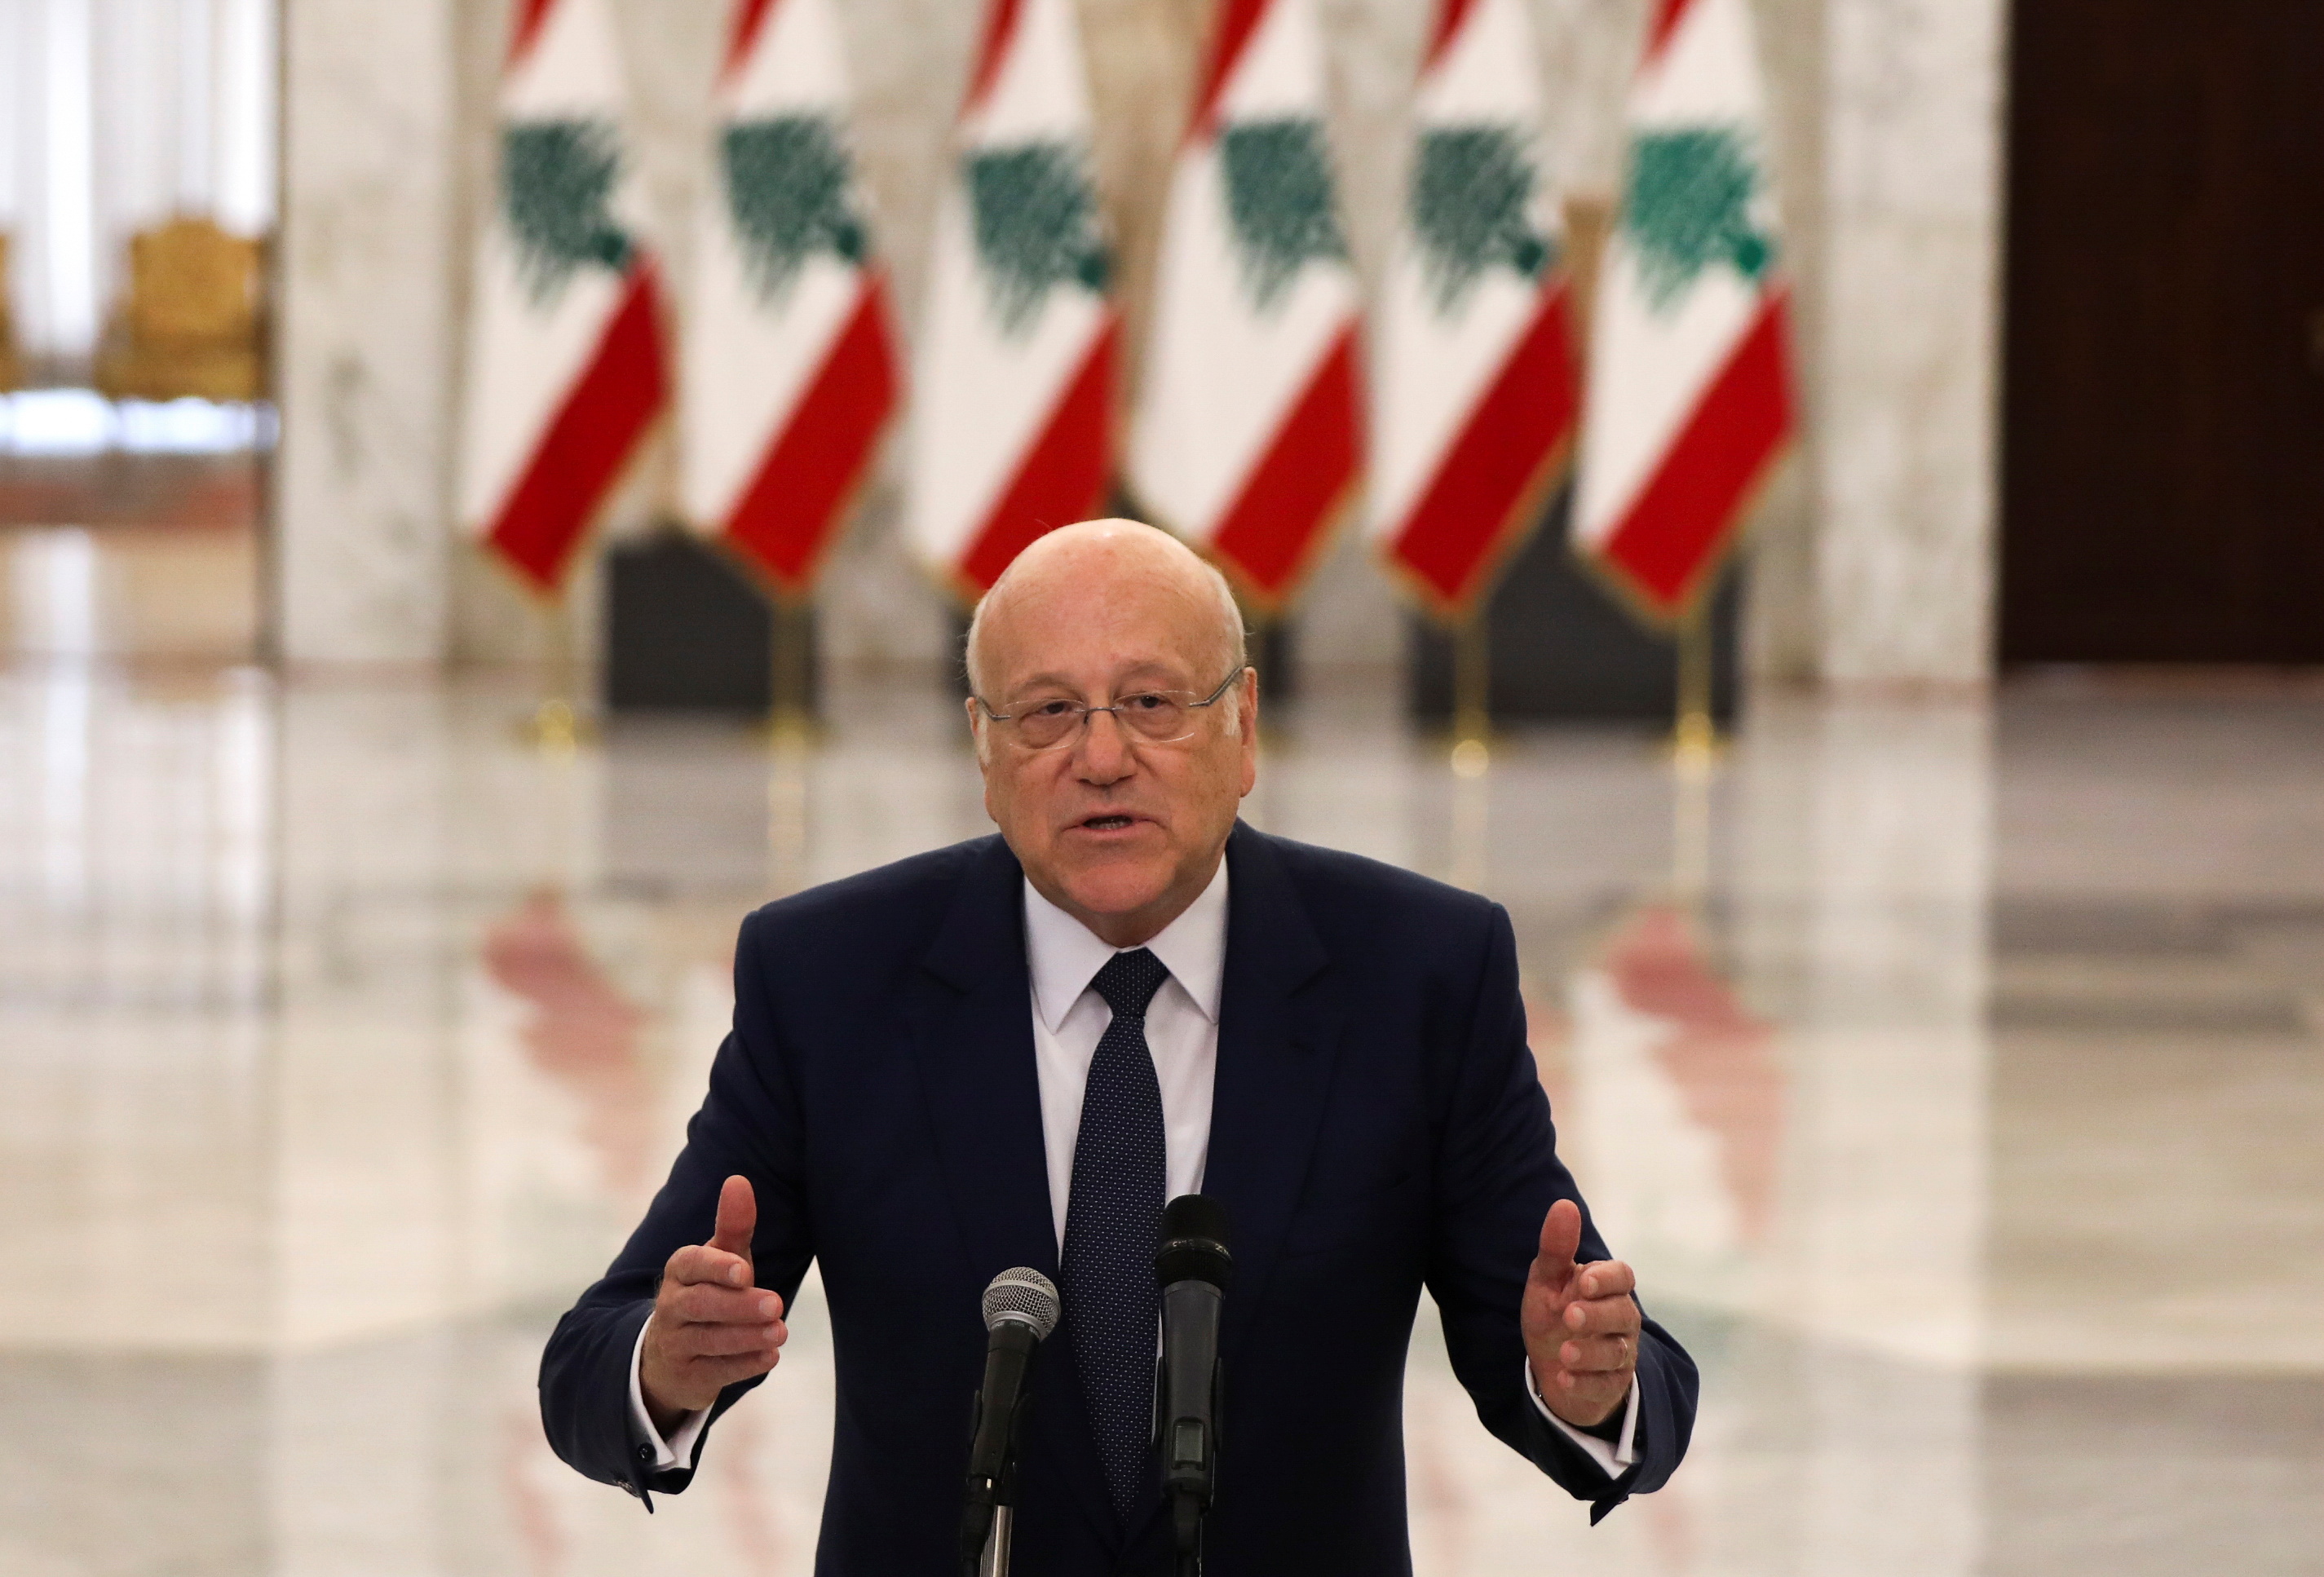 Lebanon's new Prime Minister-Designate Najib Mikati, gestures as he talks at the presidential palace in Baabda